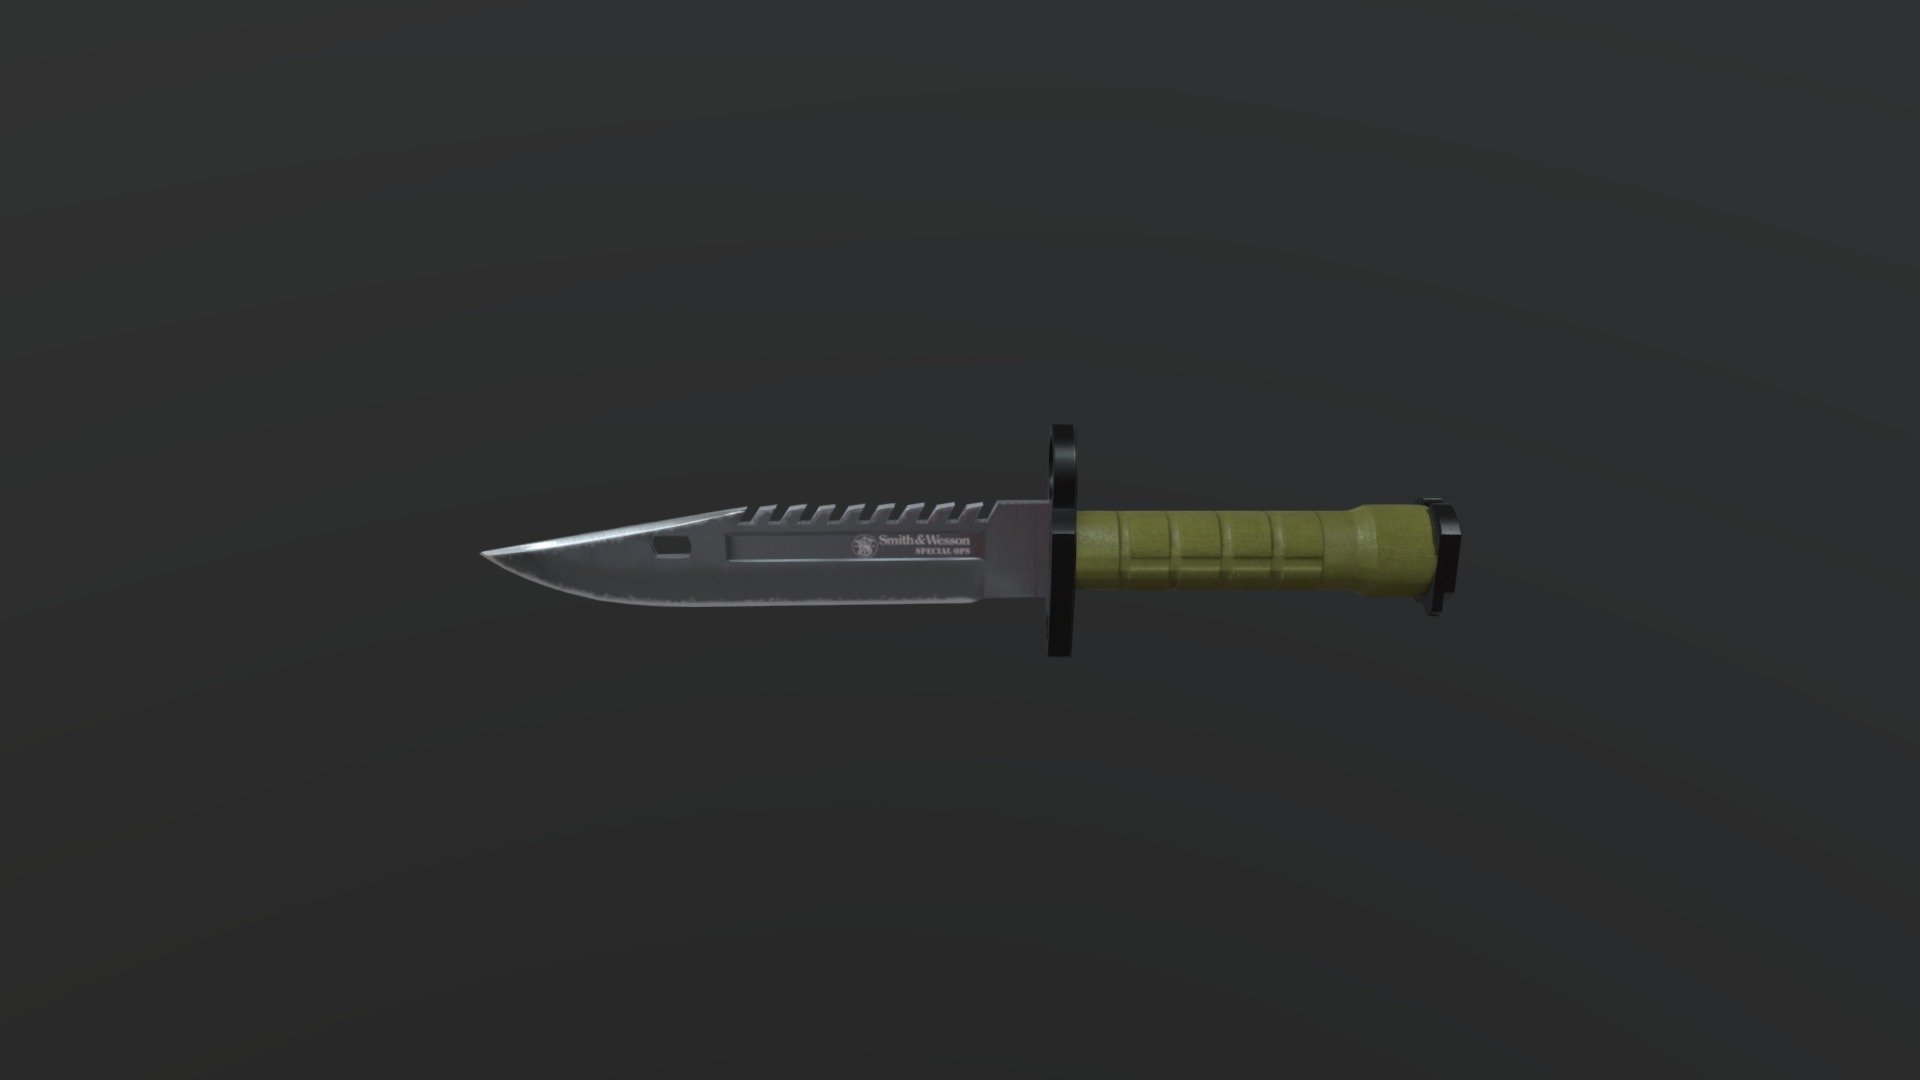 M9 Bayonet Knife A version